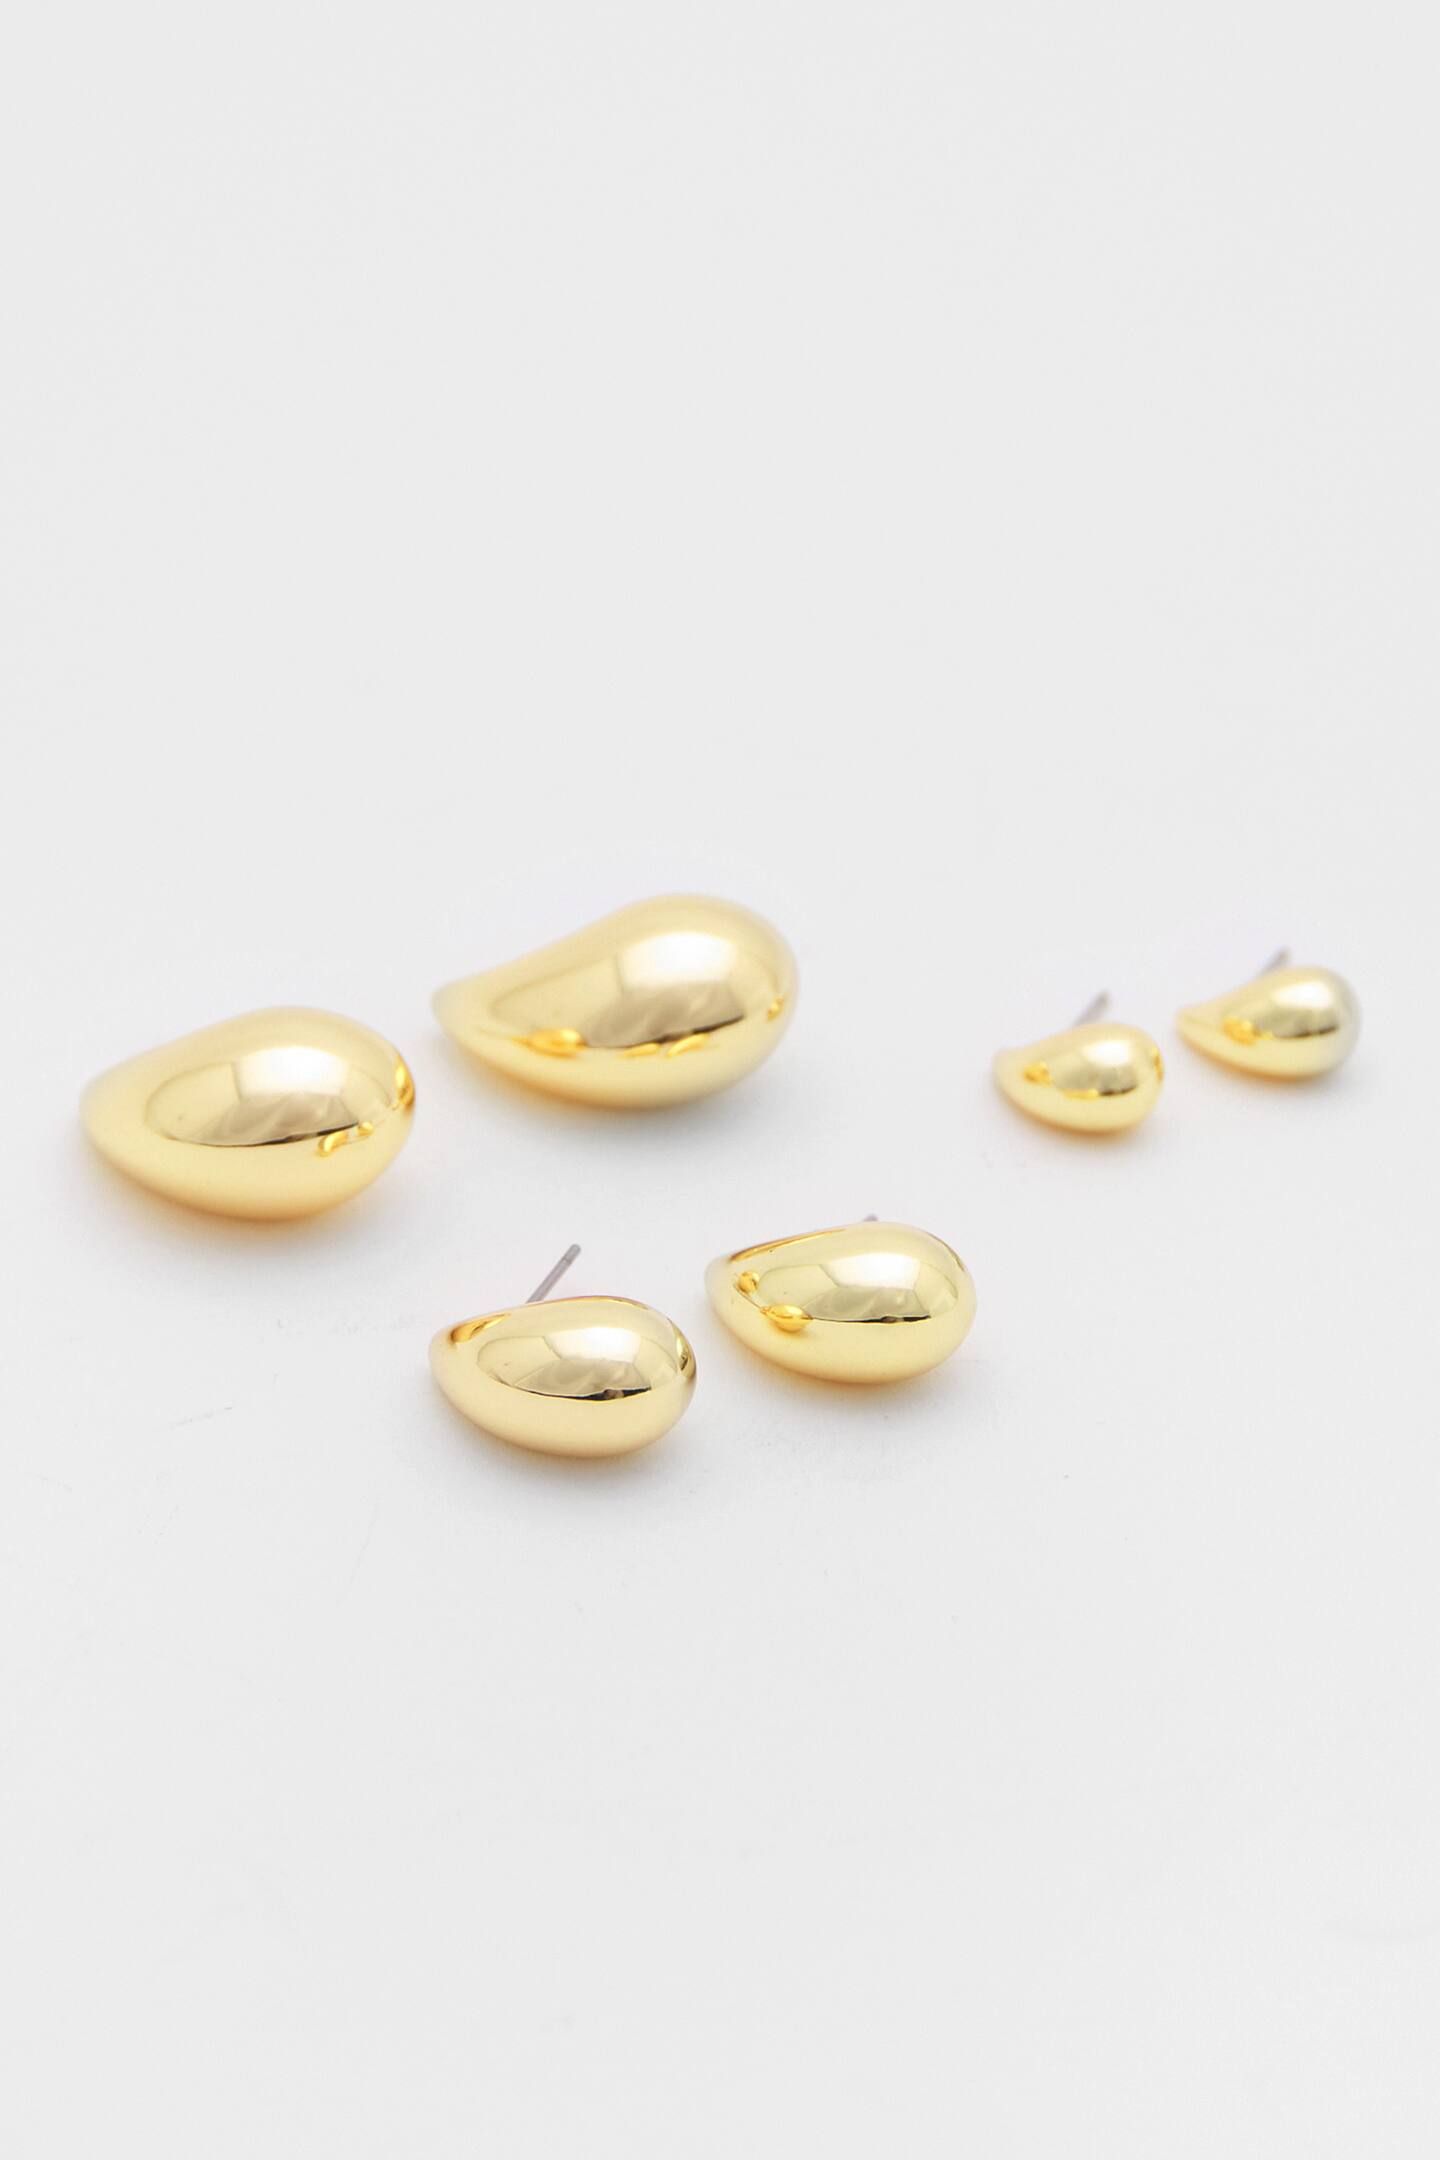 Pack of 3 pairs of teardrop earrings | PULL and BEAR UK